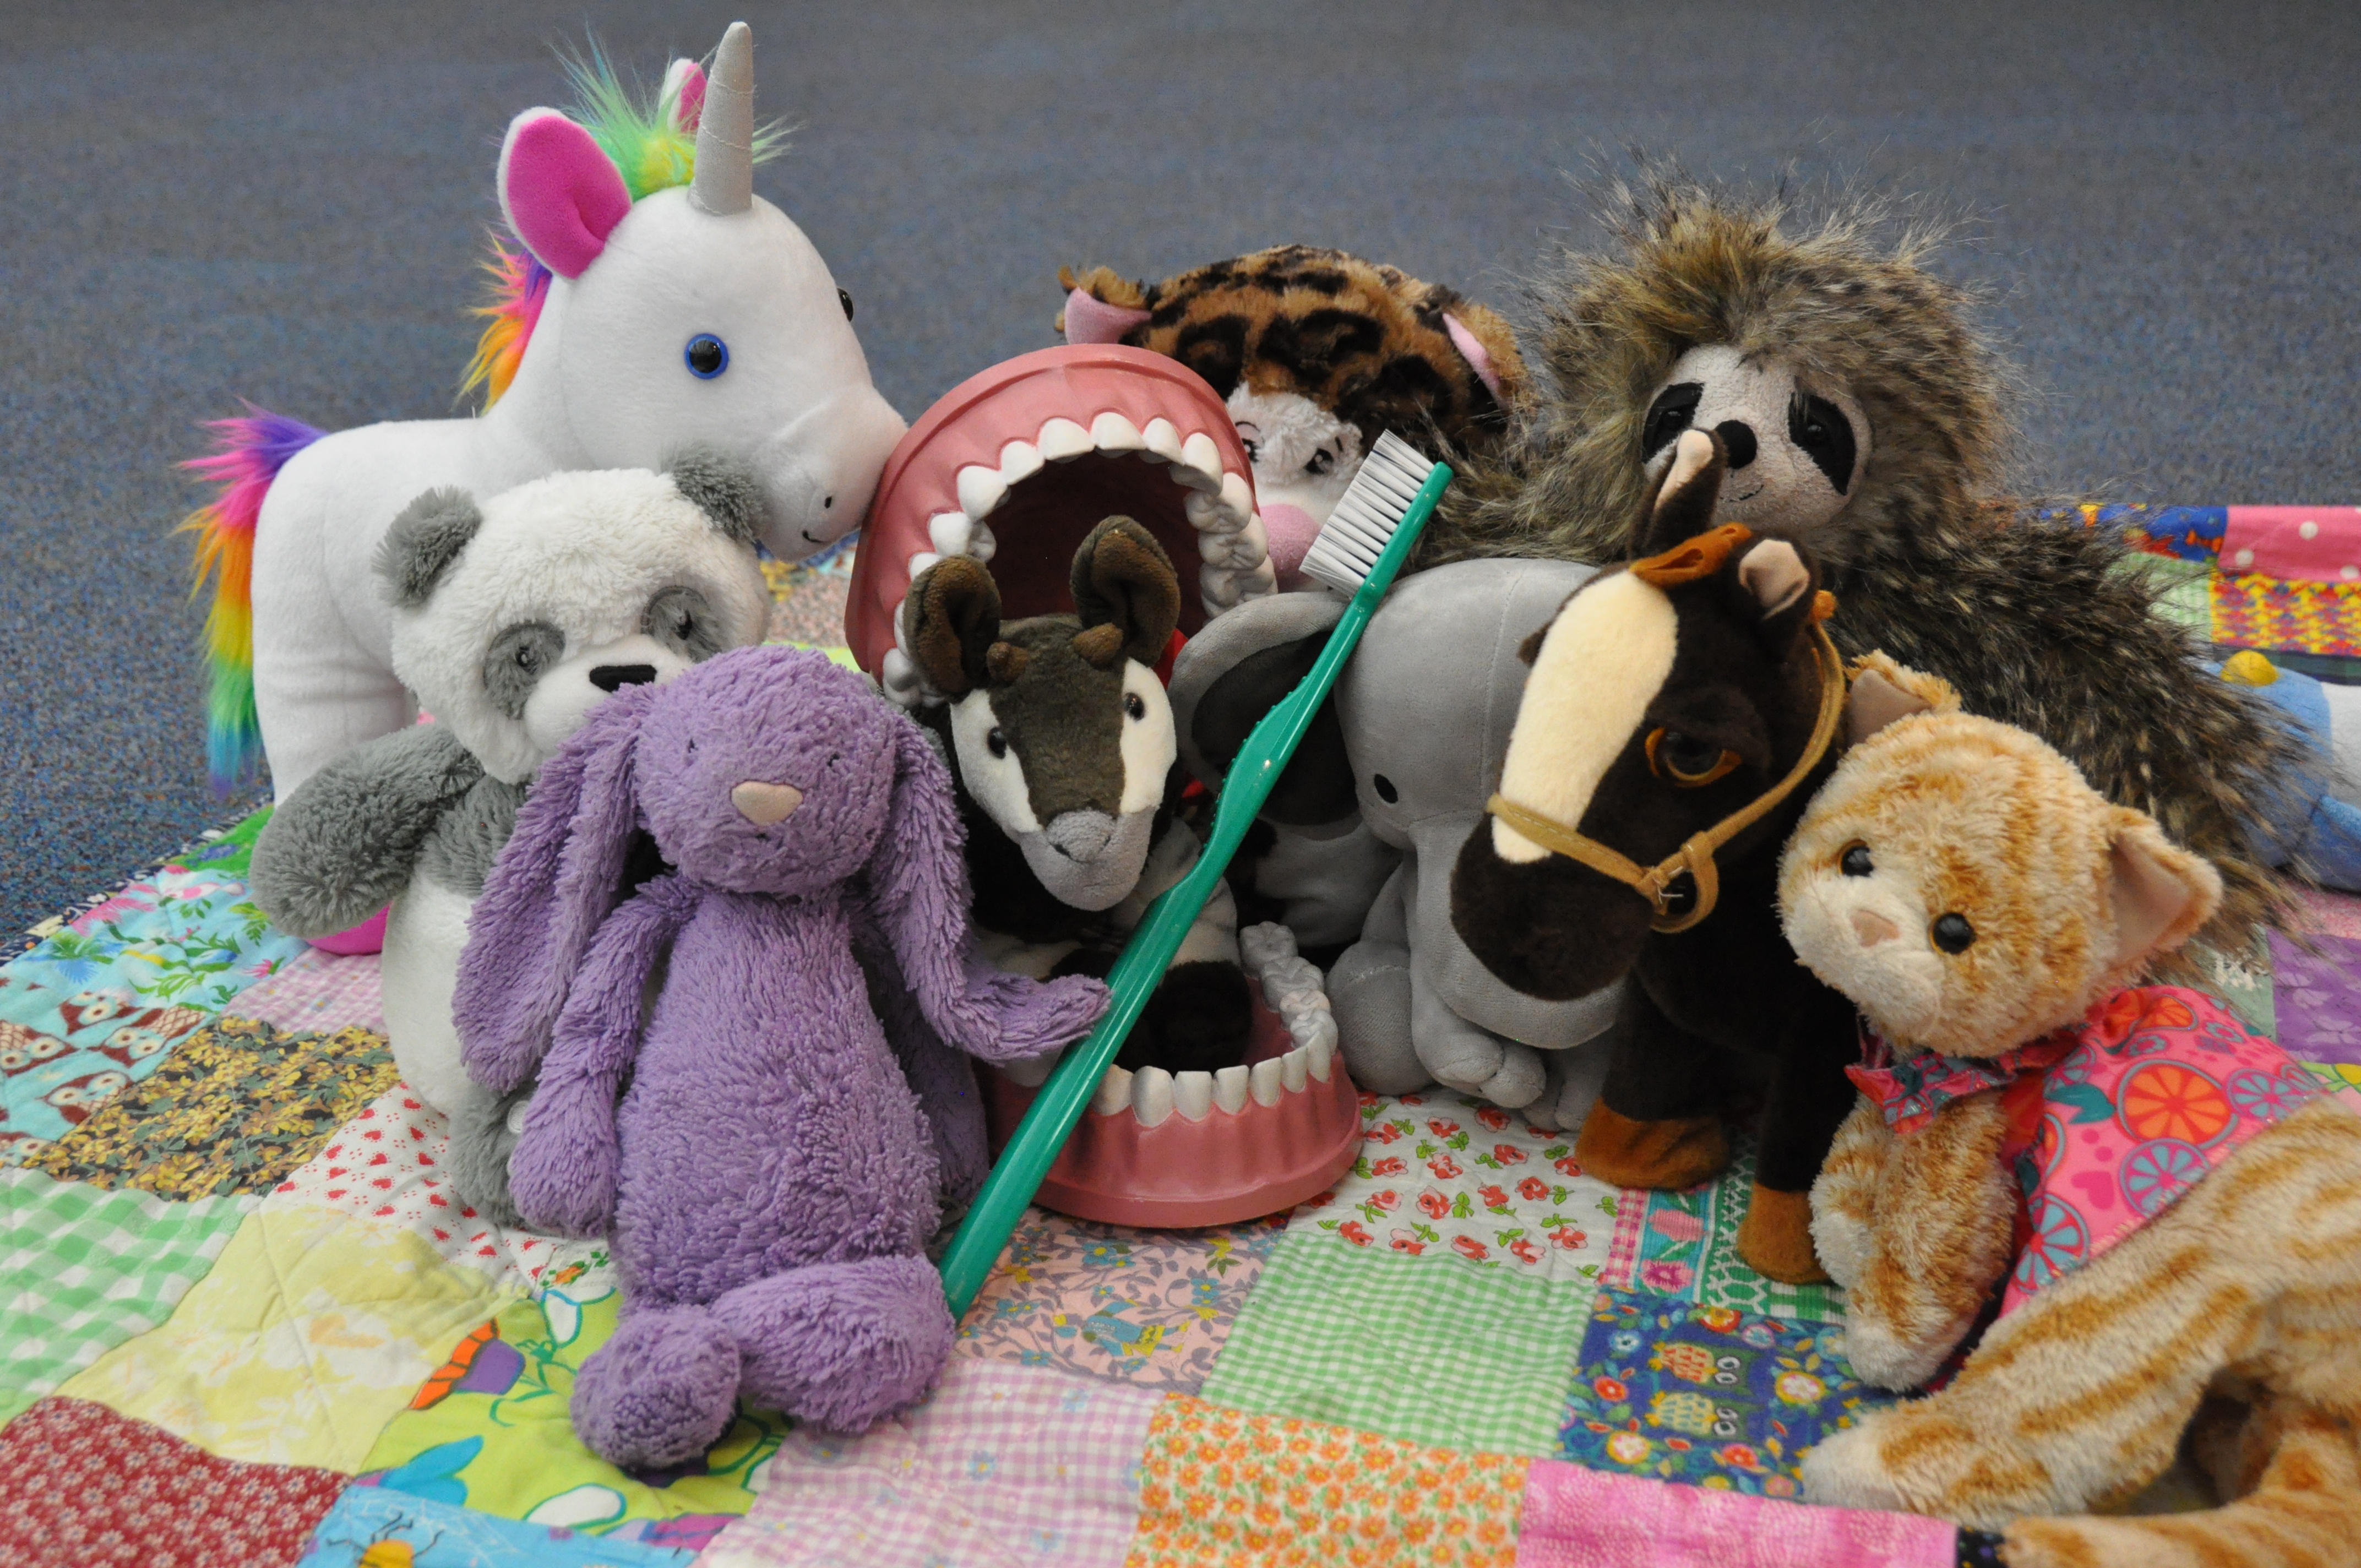 stuffed animals including a unicorn, rabbit, panda and mouse brushing a large set of fake teeth